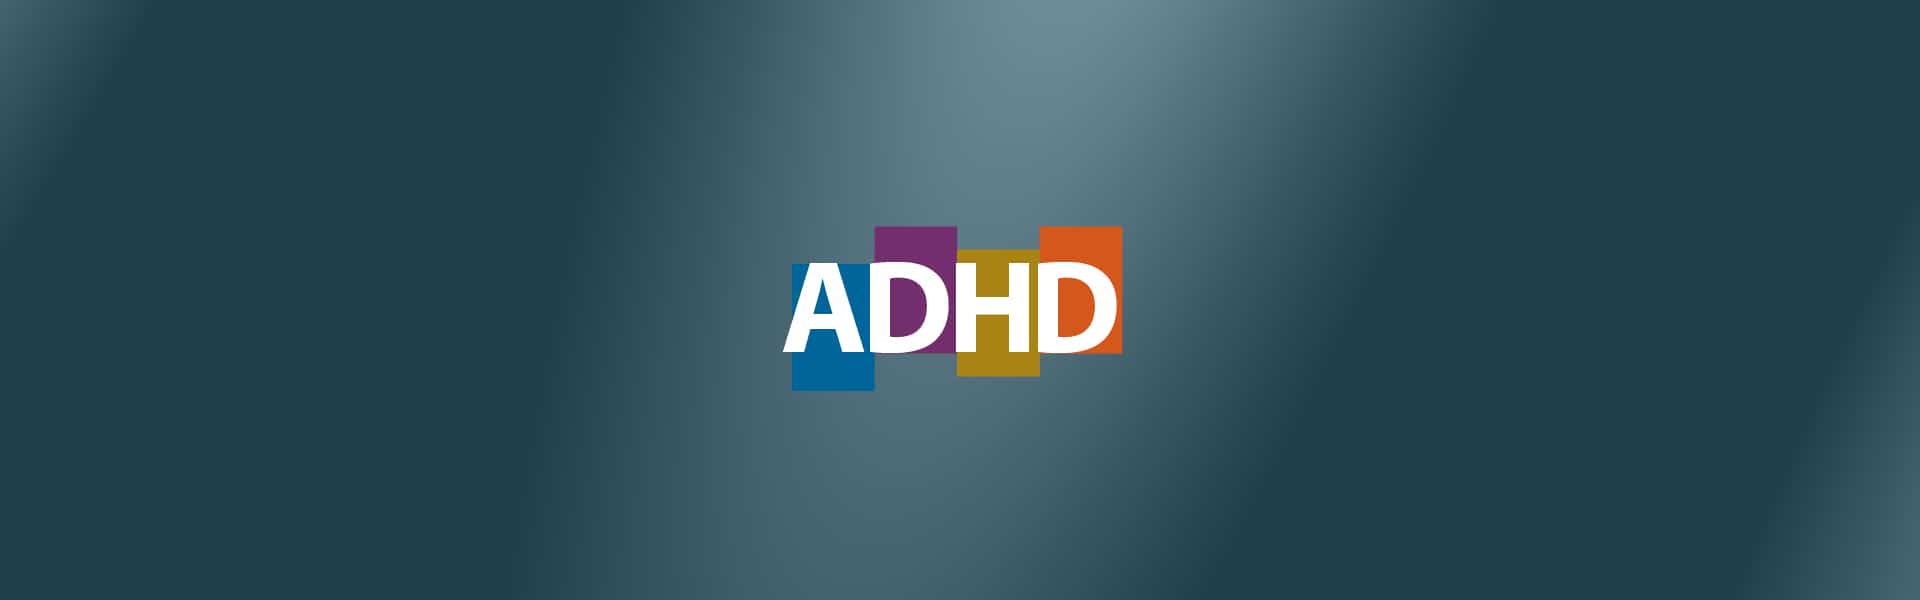 ADHD uddannelse